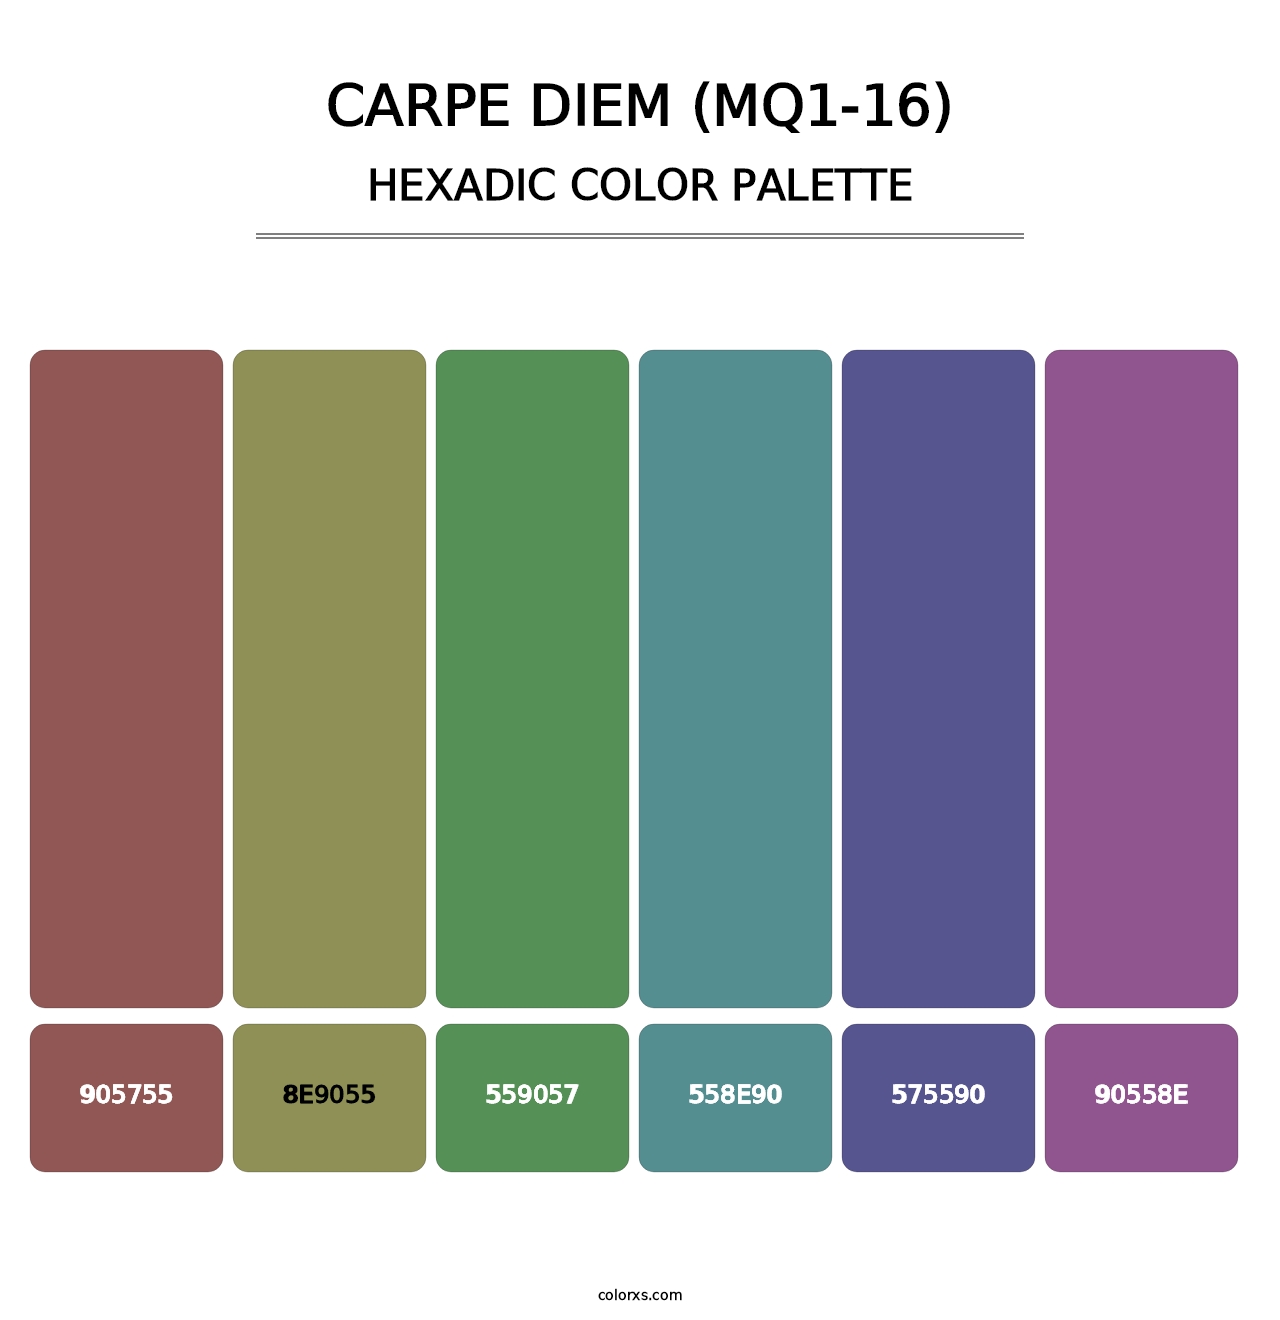 Carpe Diem (MQ1-16) - Hexadic Color Palette